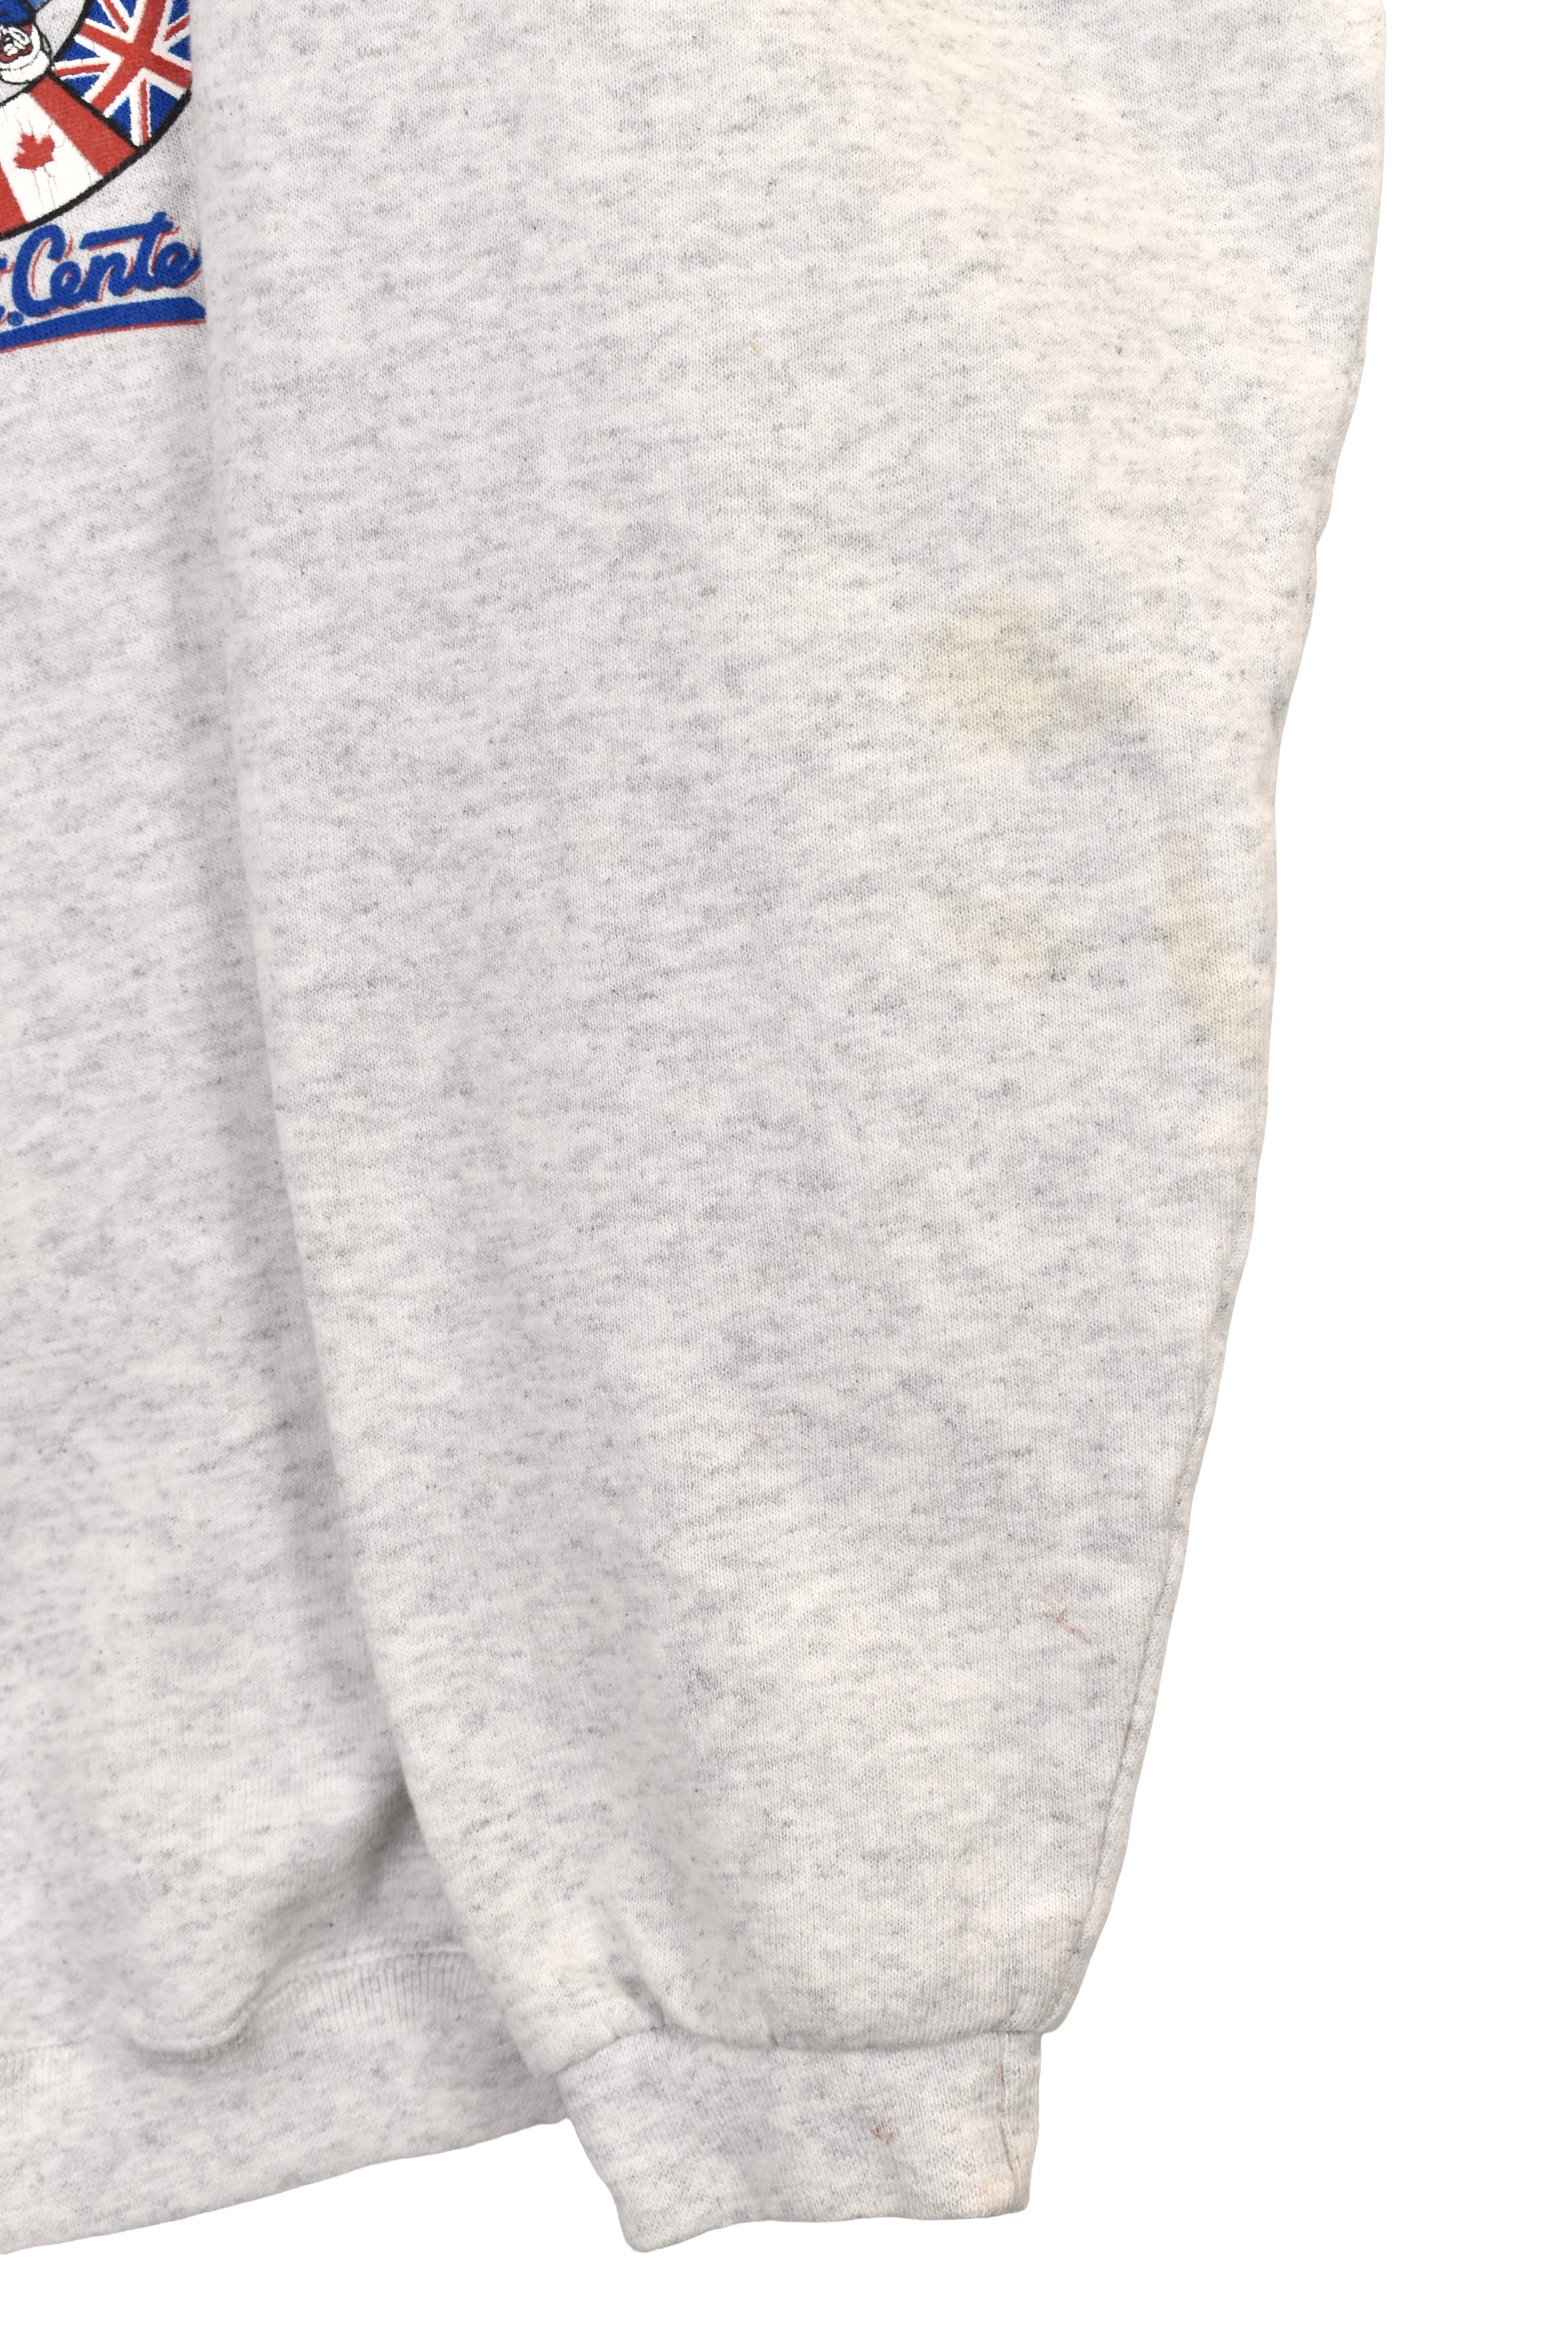 Vintage Epcot Center sweatshirt (L), grey Disney 1/4 zip jumper